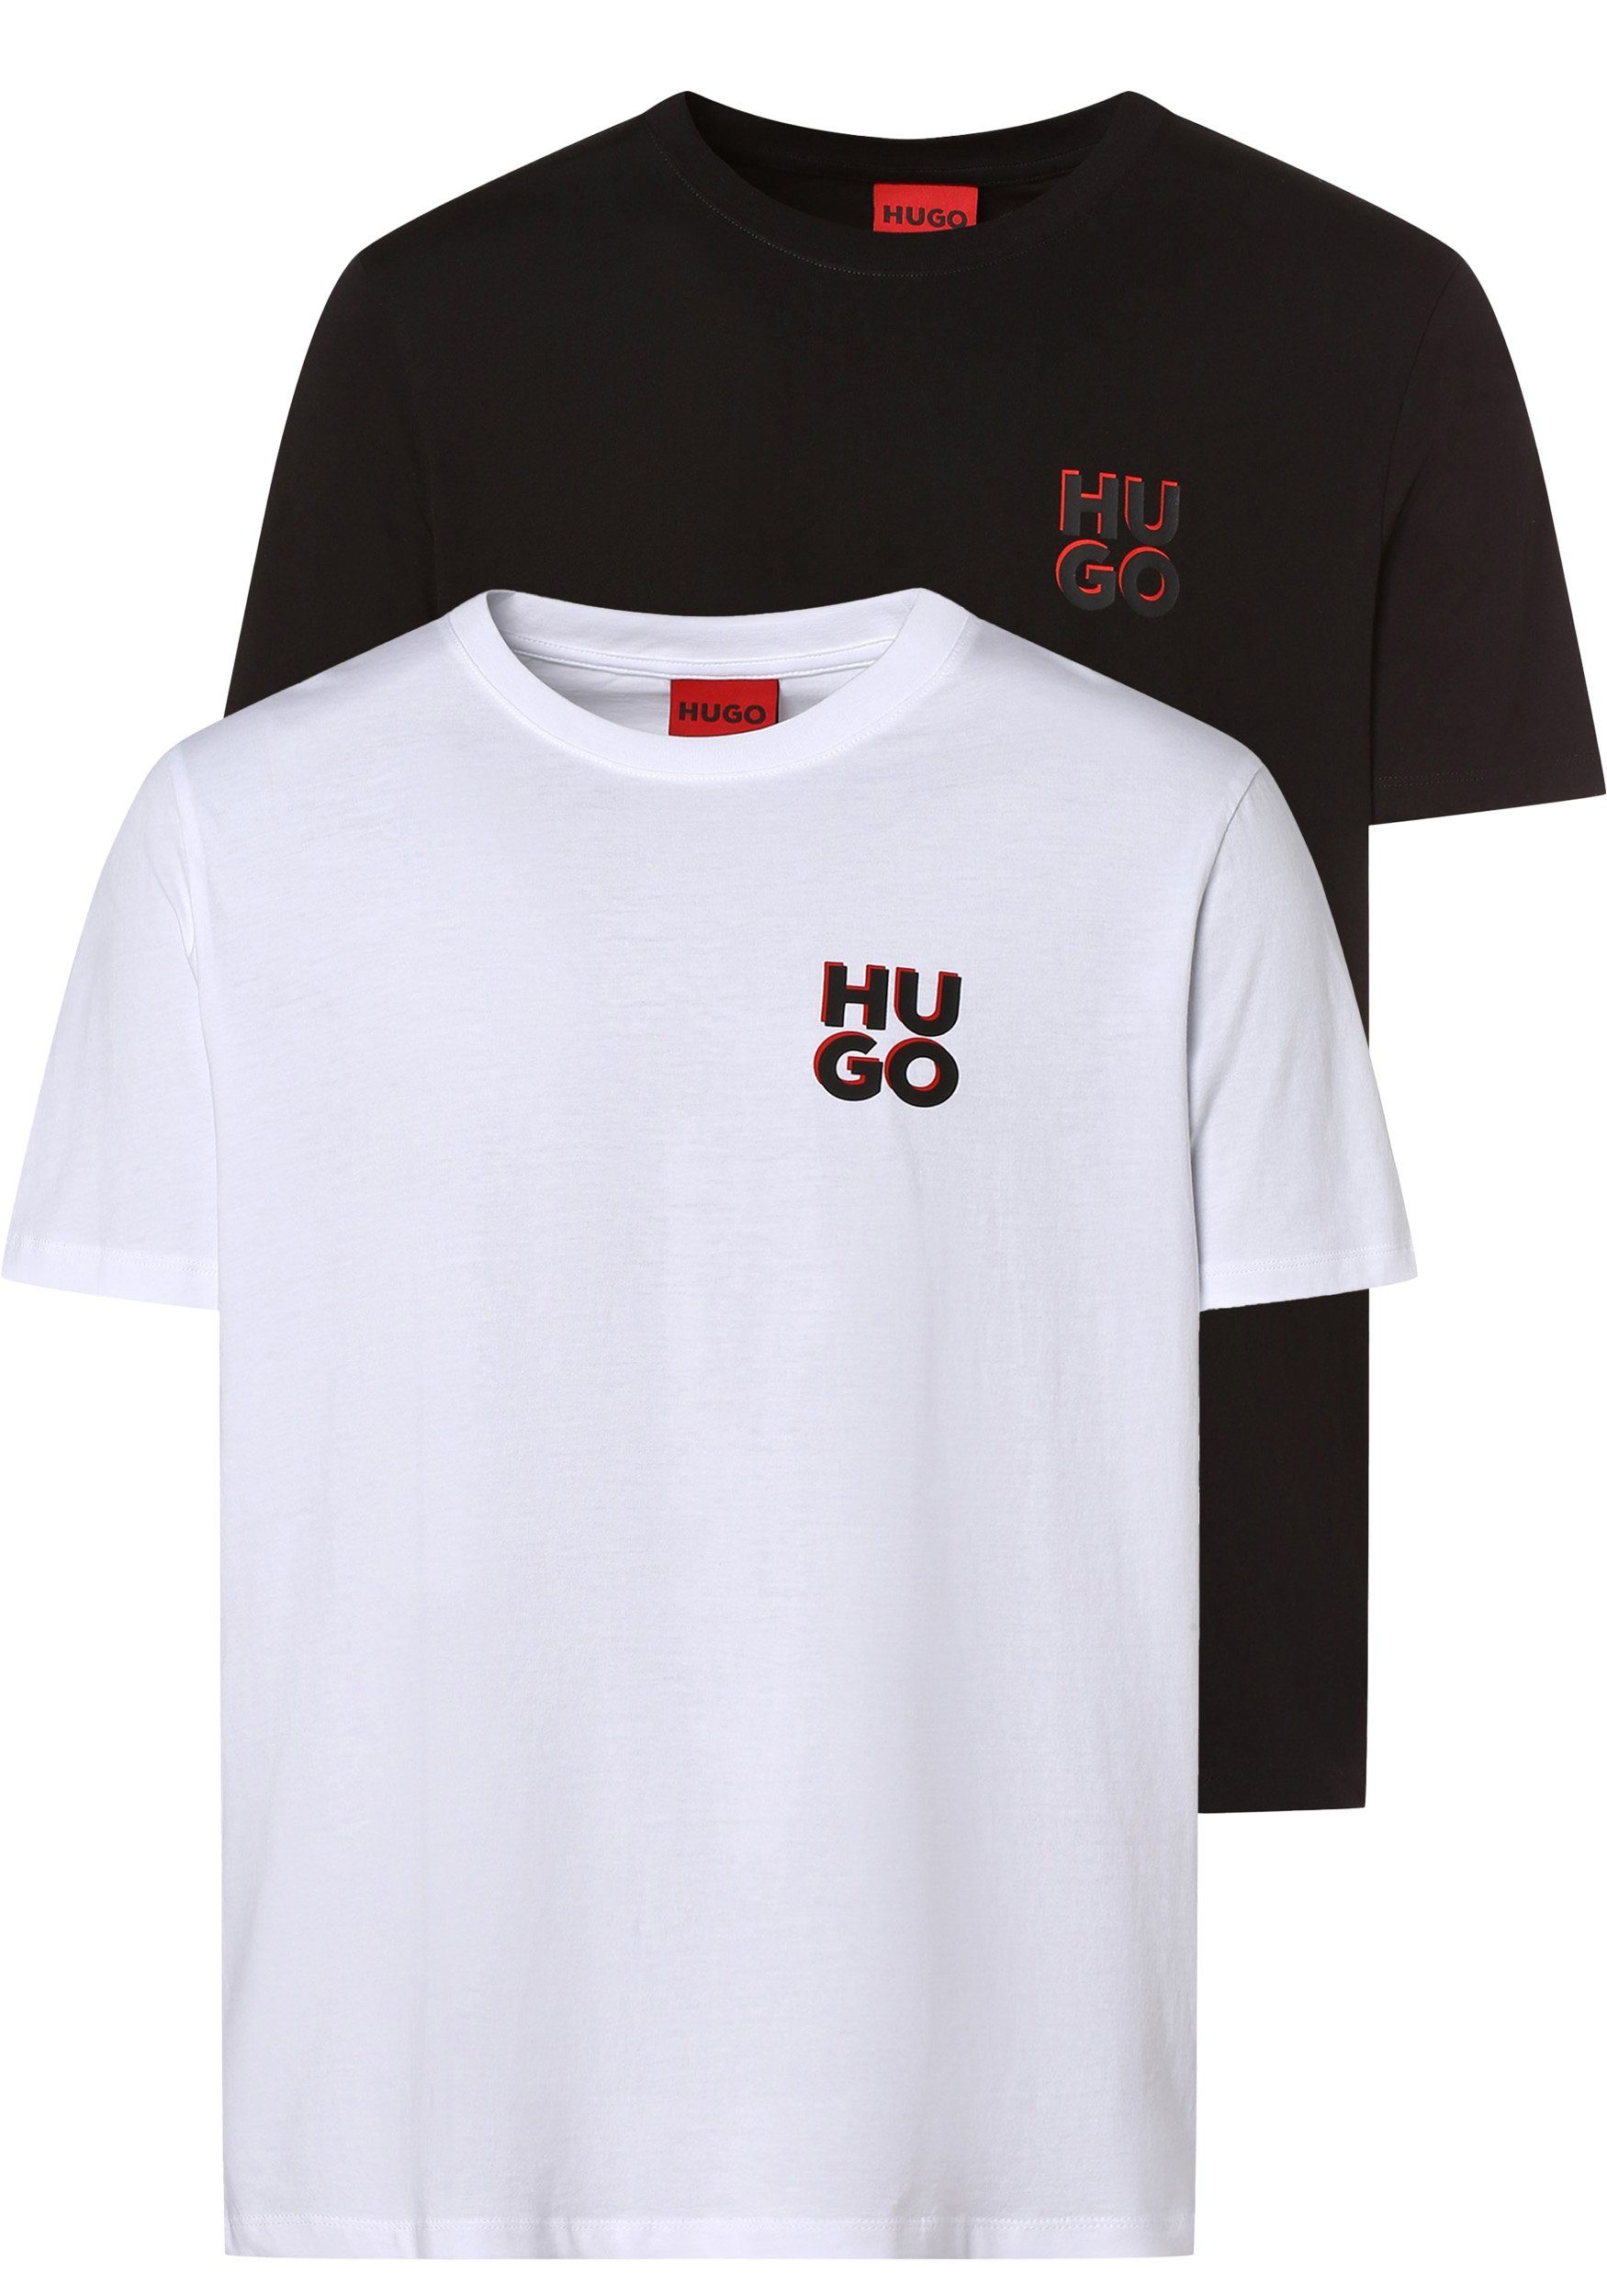 Boss 2er-Pack) Dimento Kurzarmshirt Print Brust Herren HUGO auf T-Shirt Schwarz/Weiß Logo Pack, Hugo (2er der